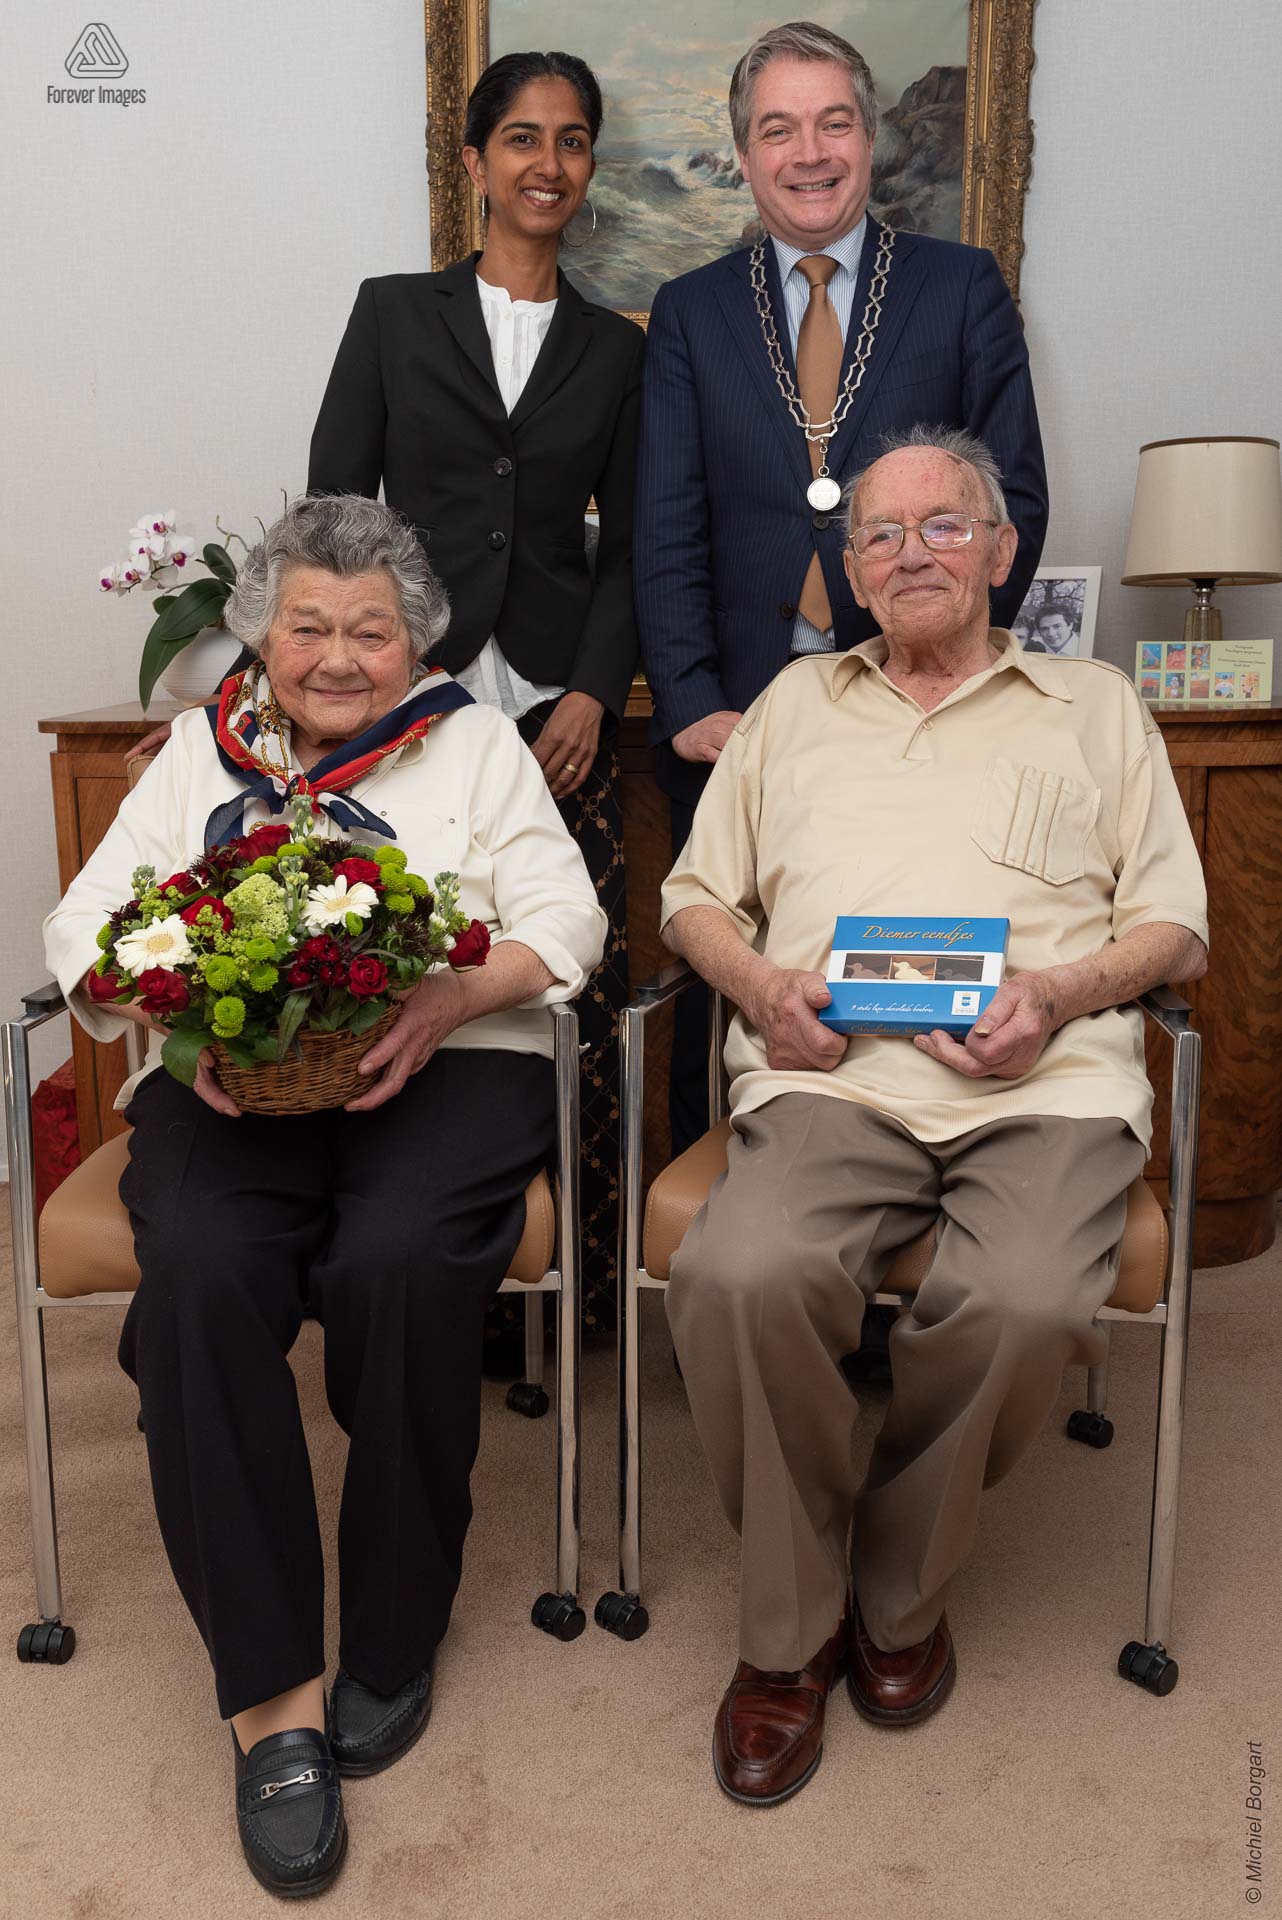 Portretfoto echtpaar Hesterman-Karmelk 70 jaar getrouwd | Burgemeester Diemen Erik Boog Wahida Amier | Portretfotograaf Michiel Borgart - Forever Images.